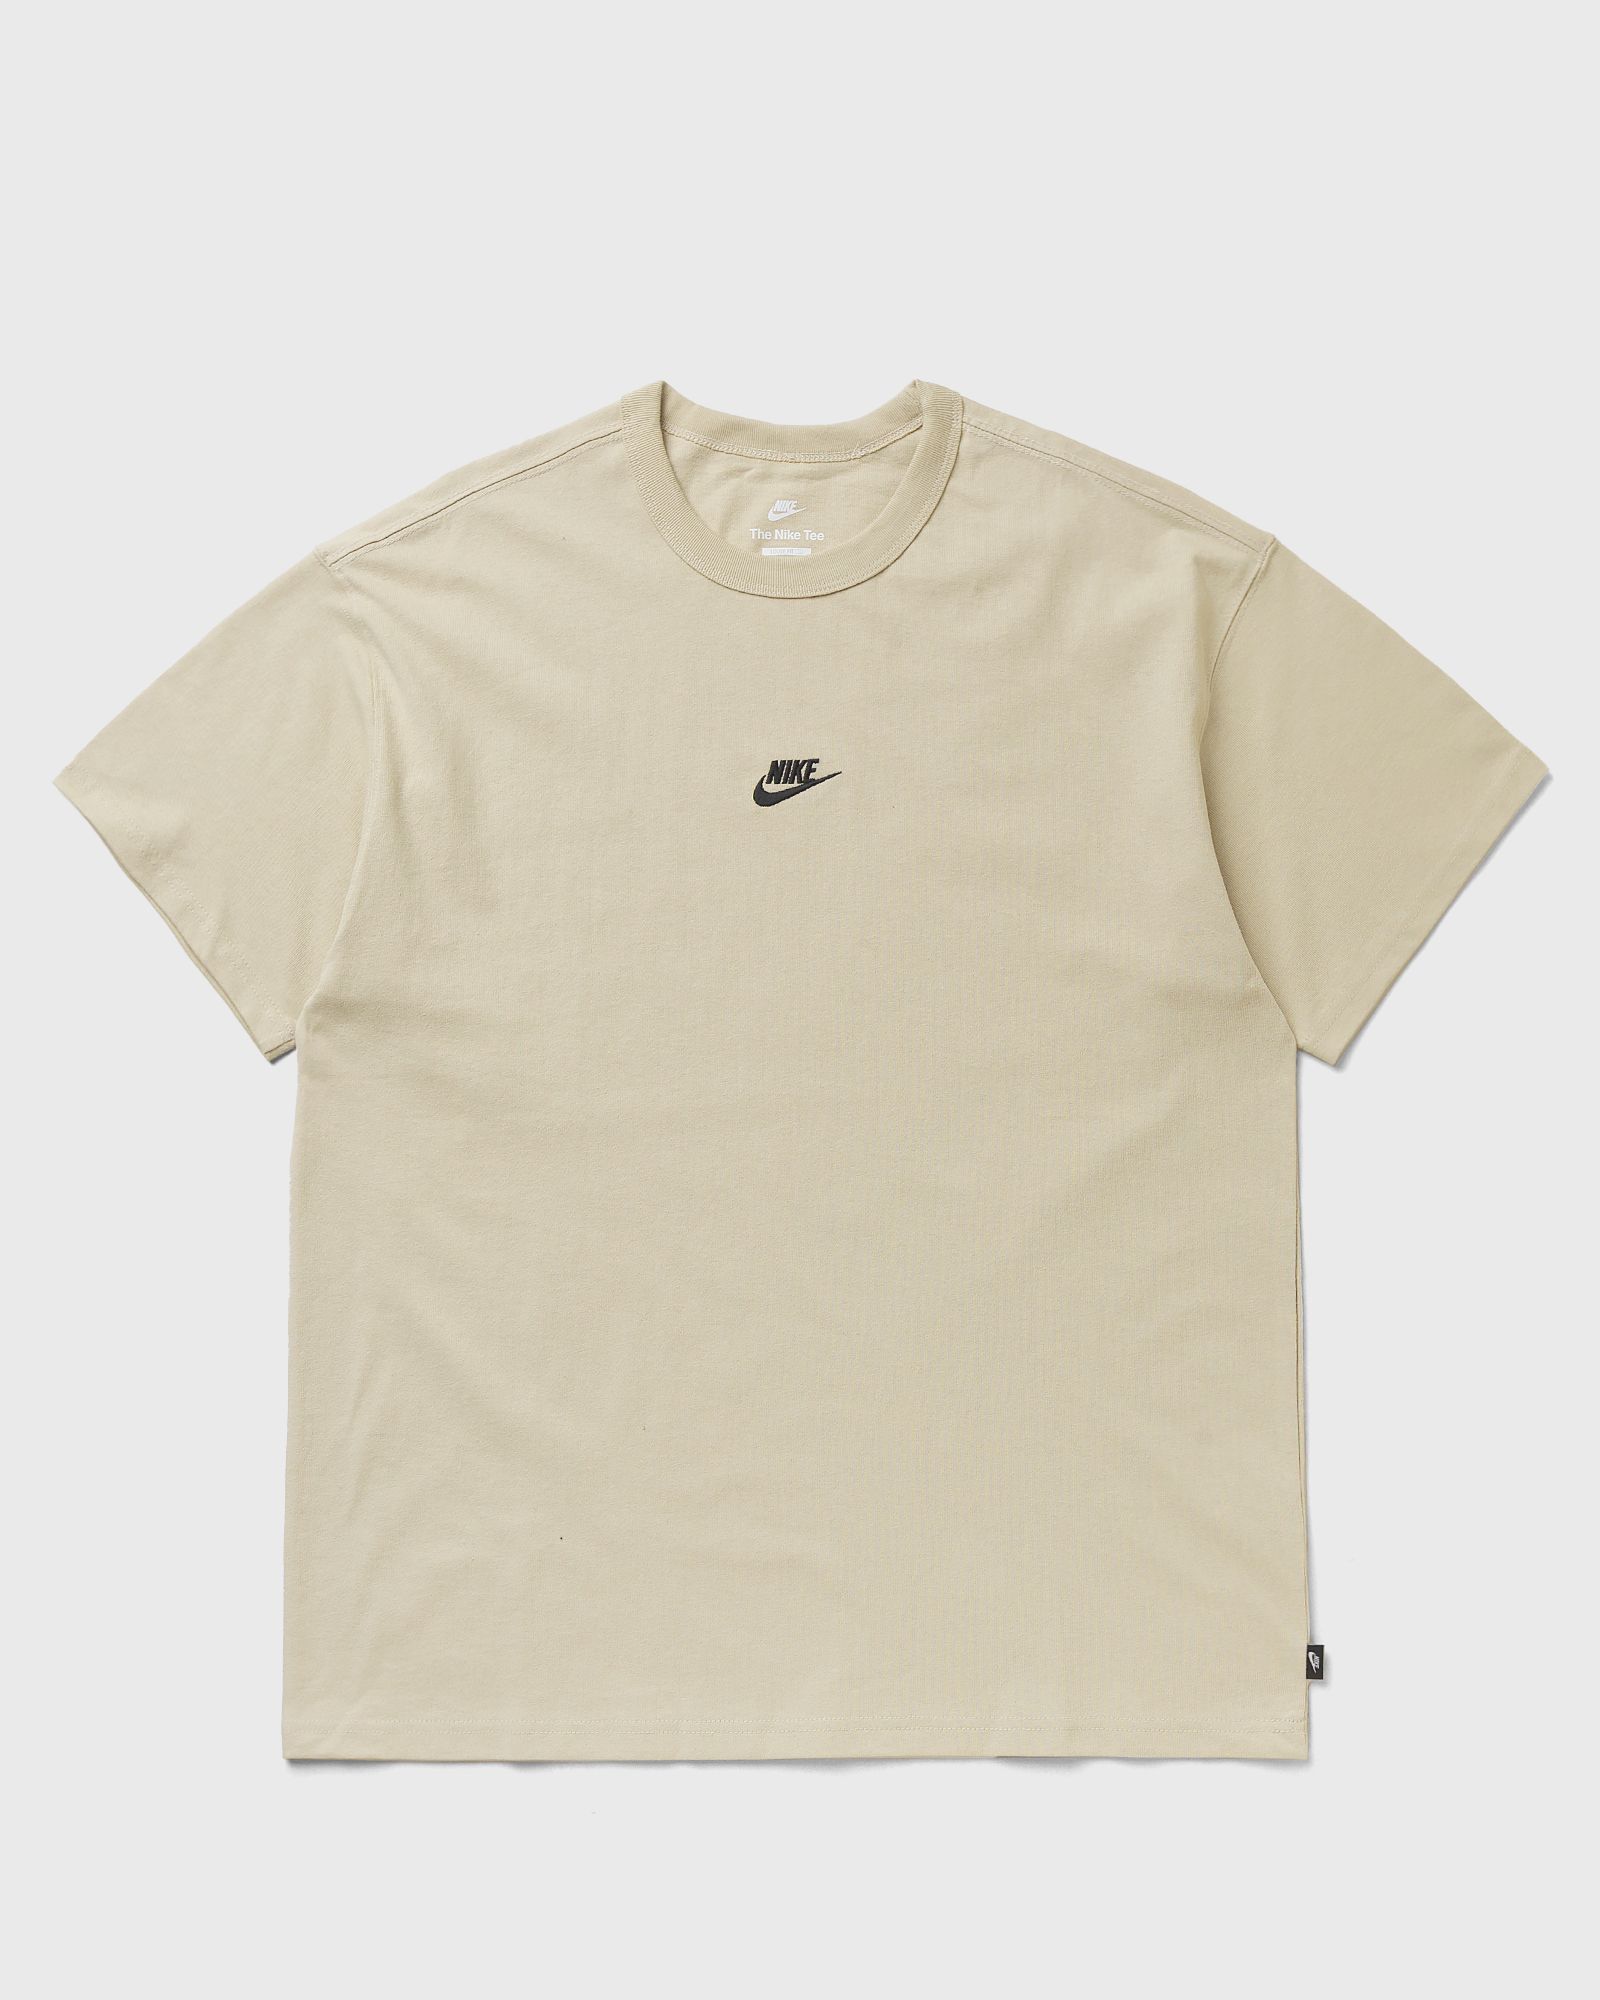 Nike - t-shirt men shortsleeves beige in größe:xxl